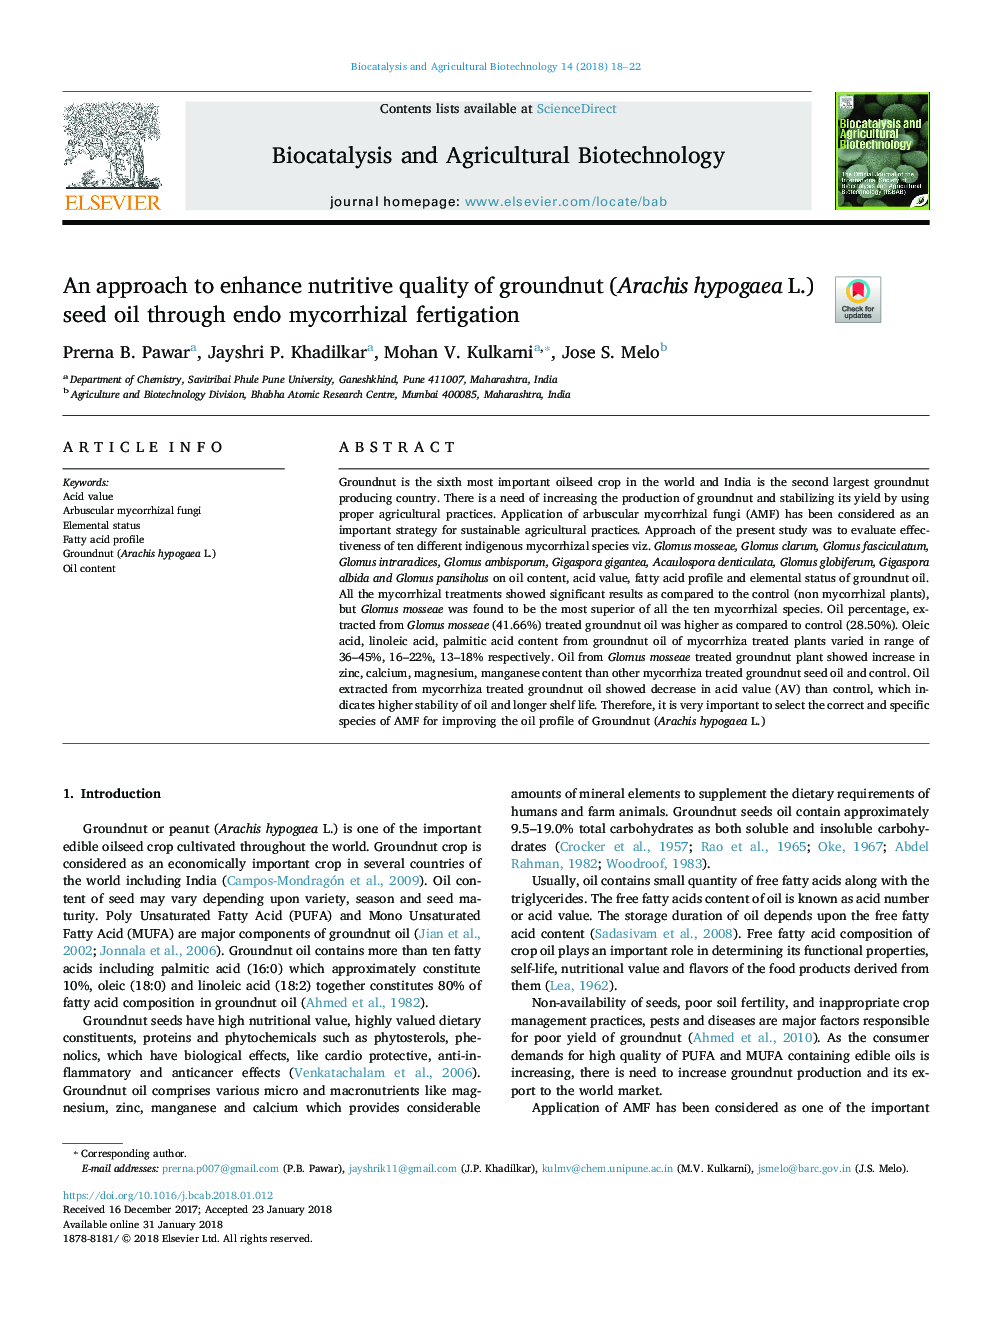 An approach to enhance nutritive quality of groundnut (Arachis hypogaea L.) seed oil through endo mycorrhizal fertigation